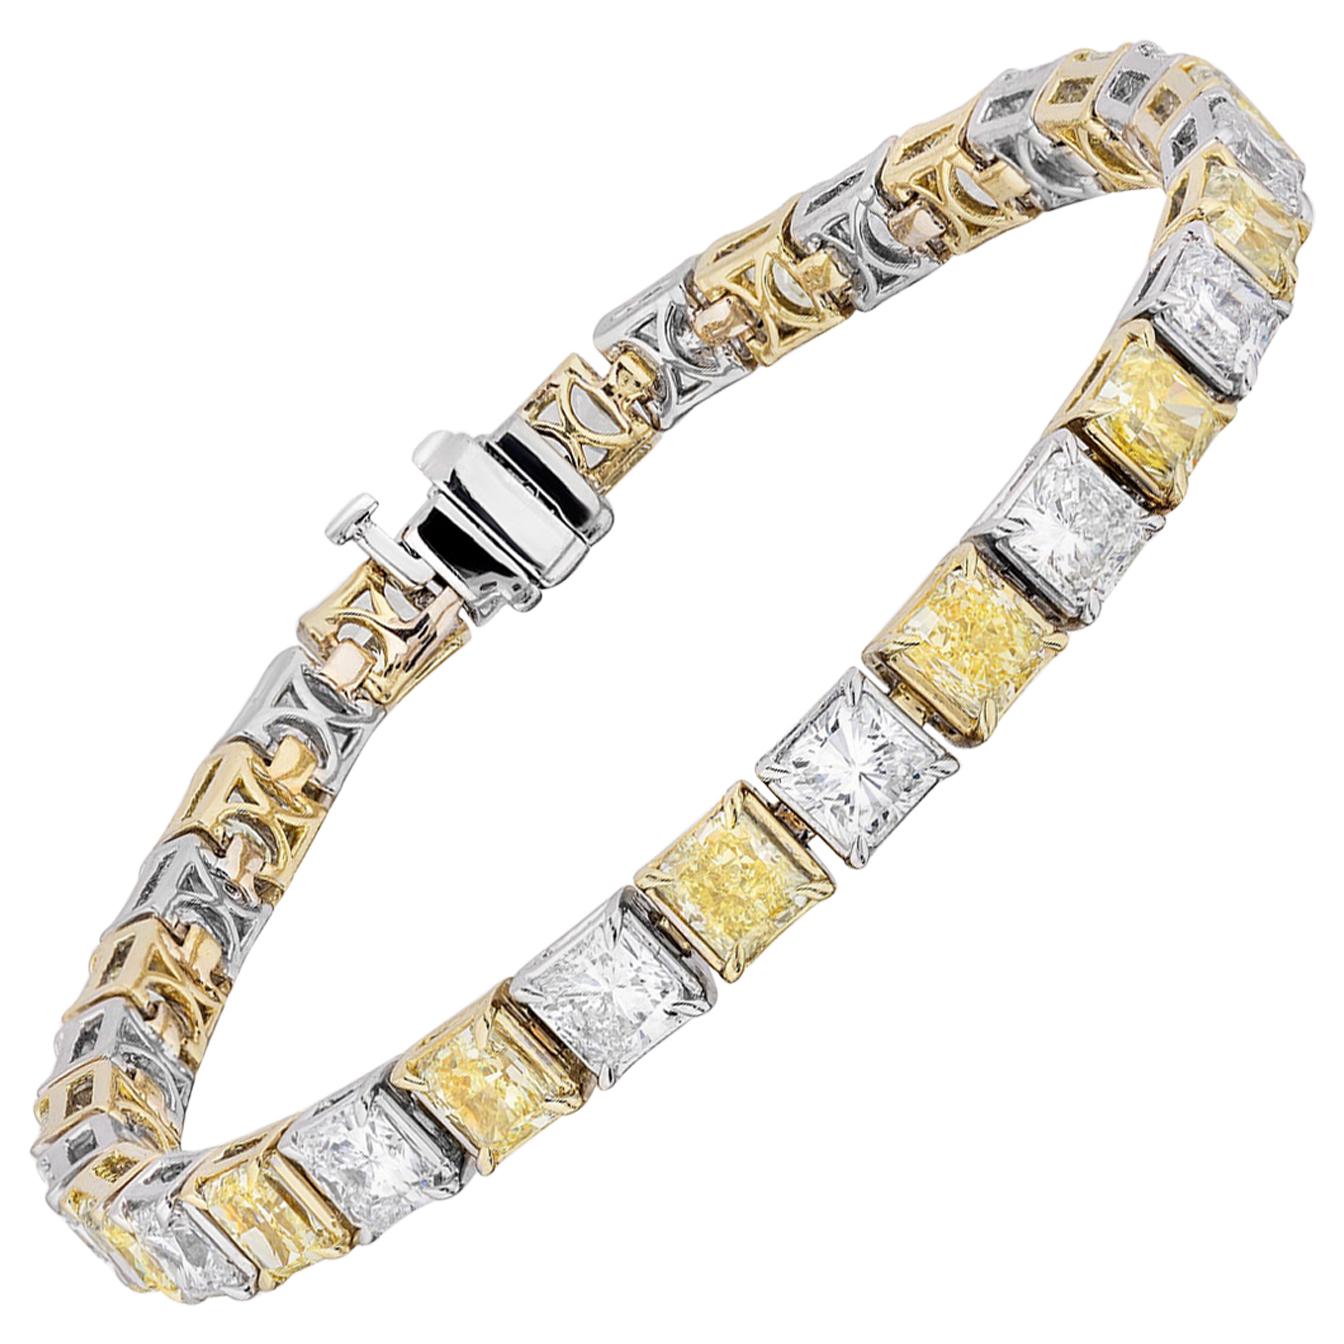 16.55 Carat Eadiant Shaped Yellow and White Diamond Bracelet